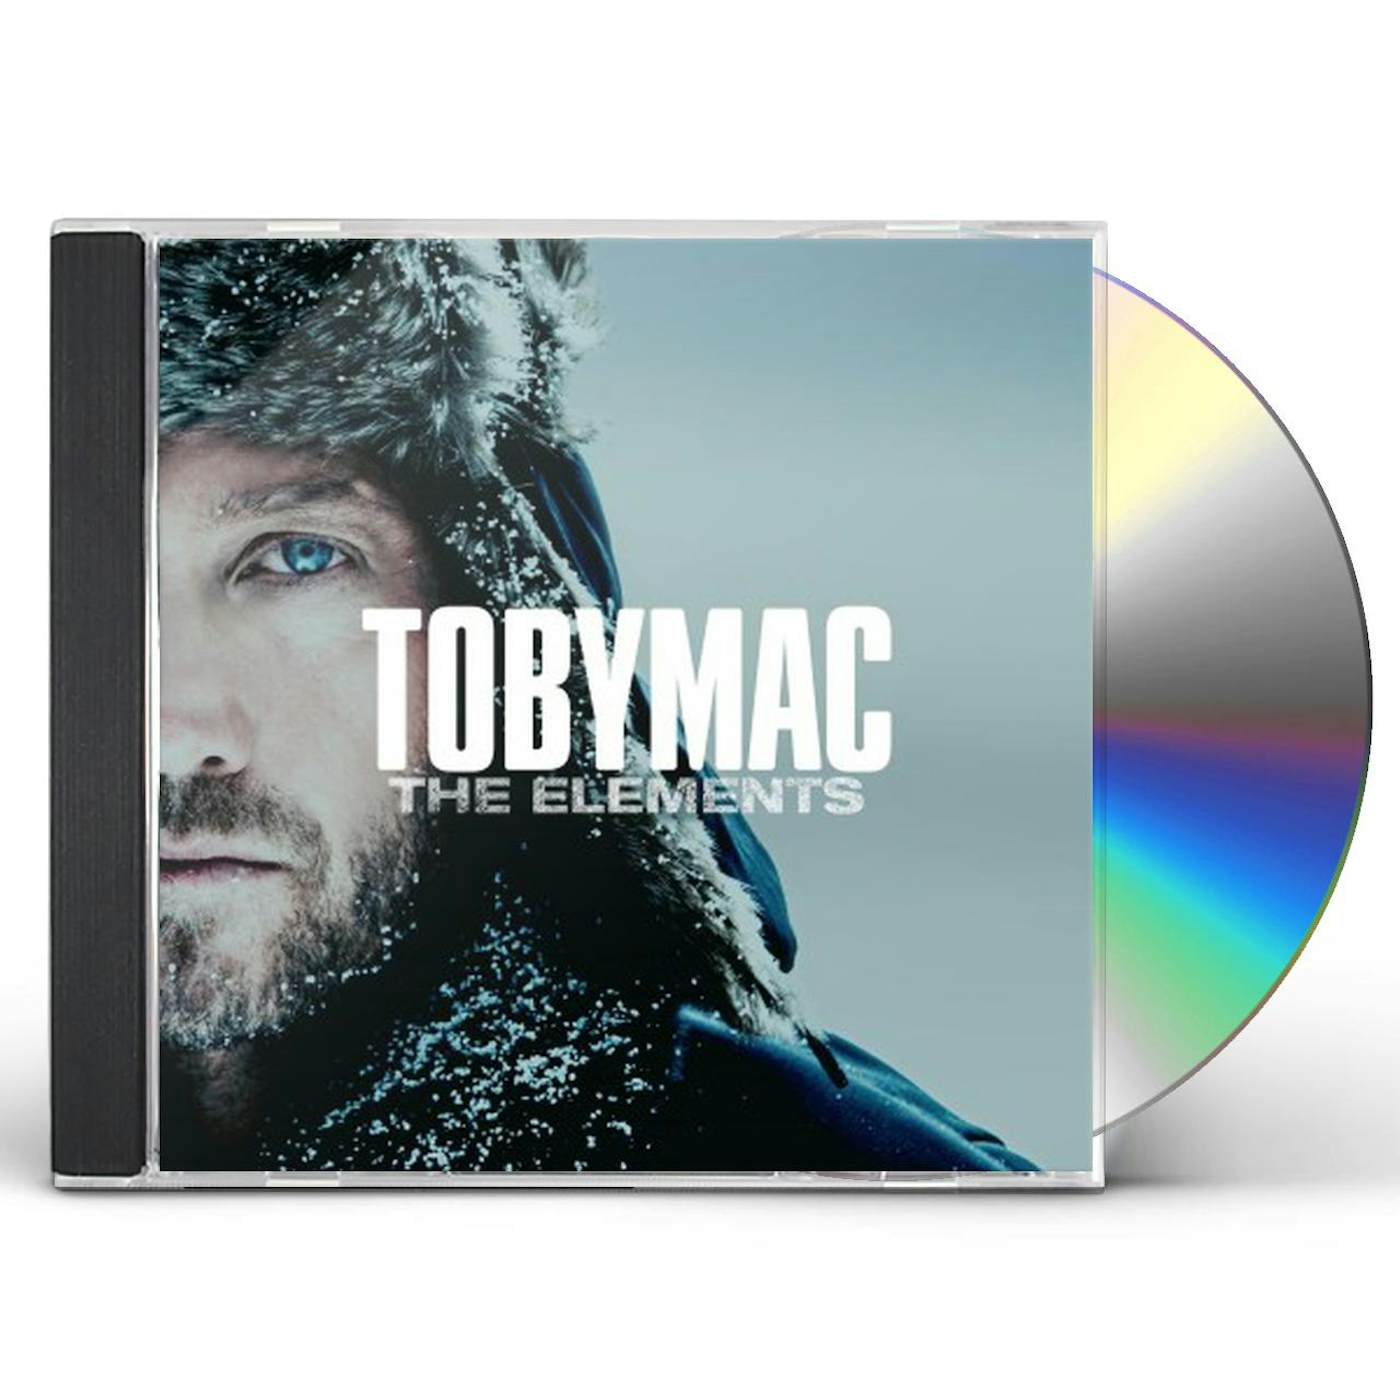 TobyMac Collection - Album by TobyMac